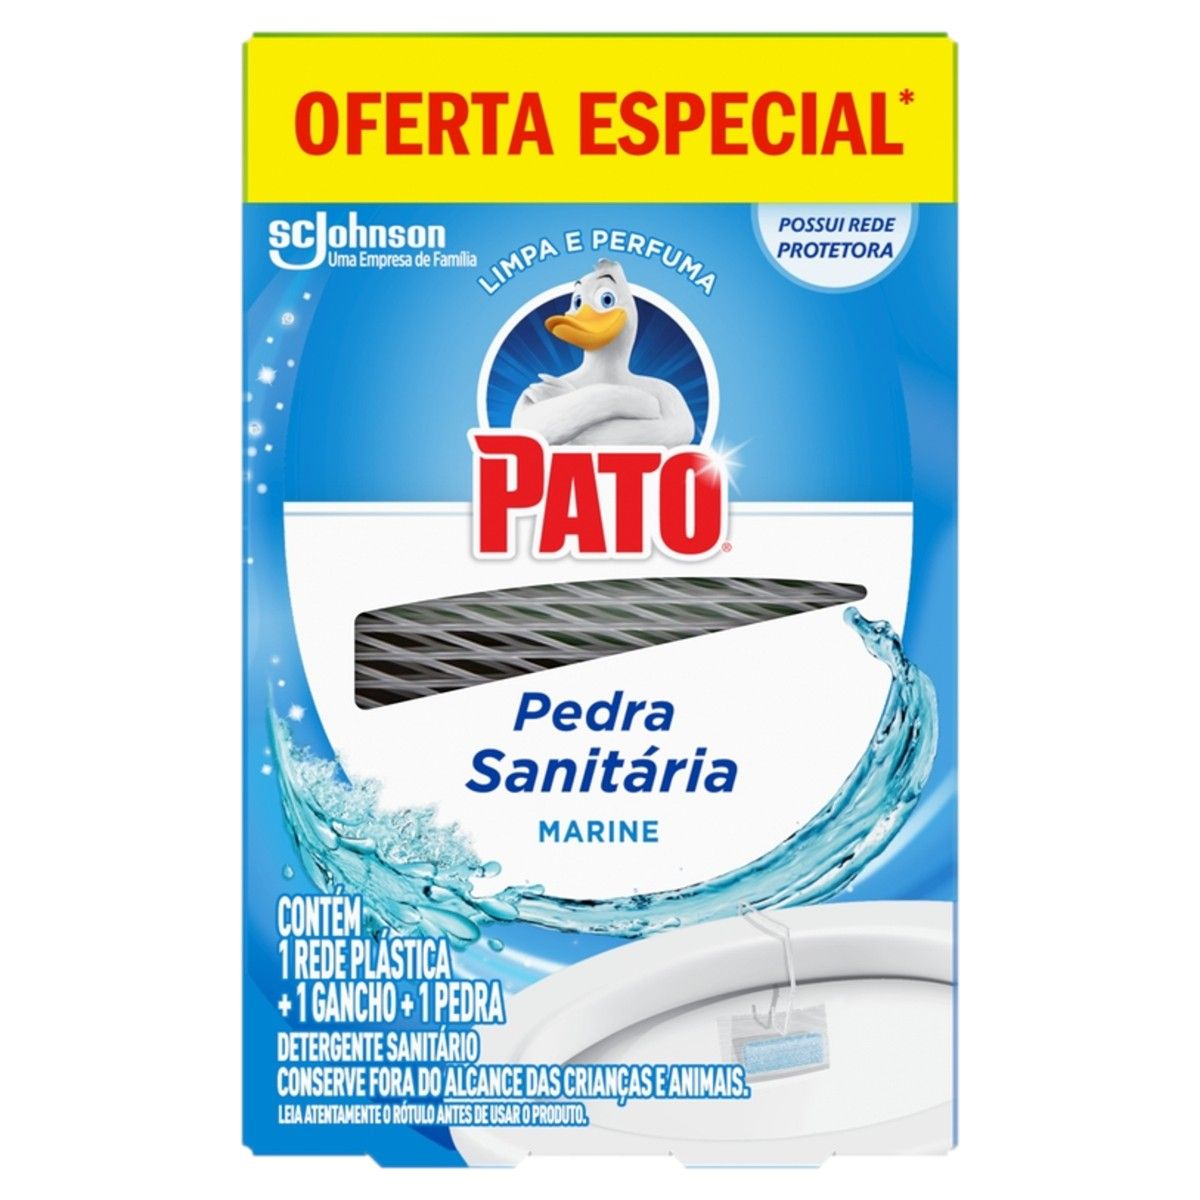 Detergente Sanitário Pedra Pato Marine Oferta Especial image number 0